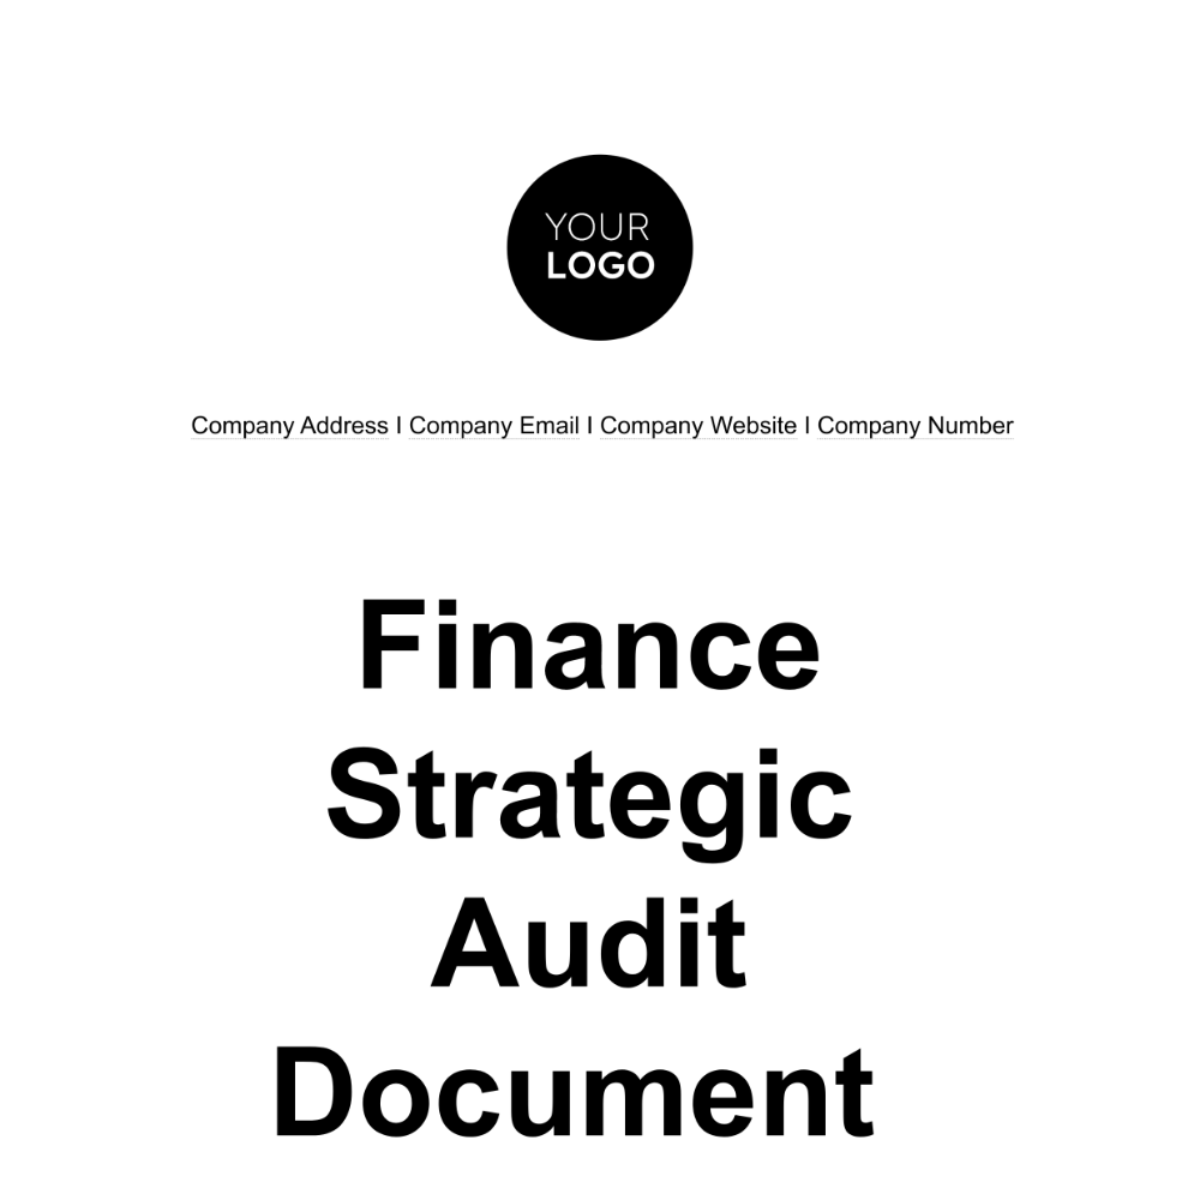 Finance Strategic Audit Document Template